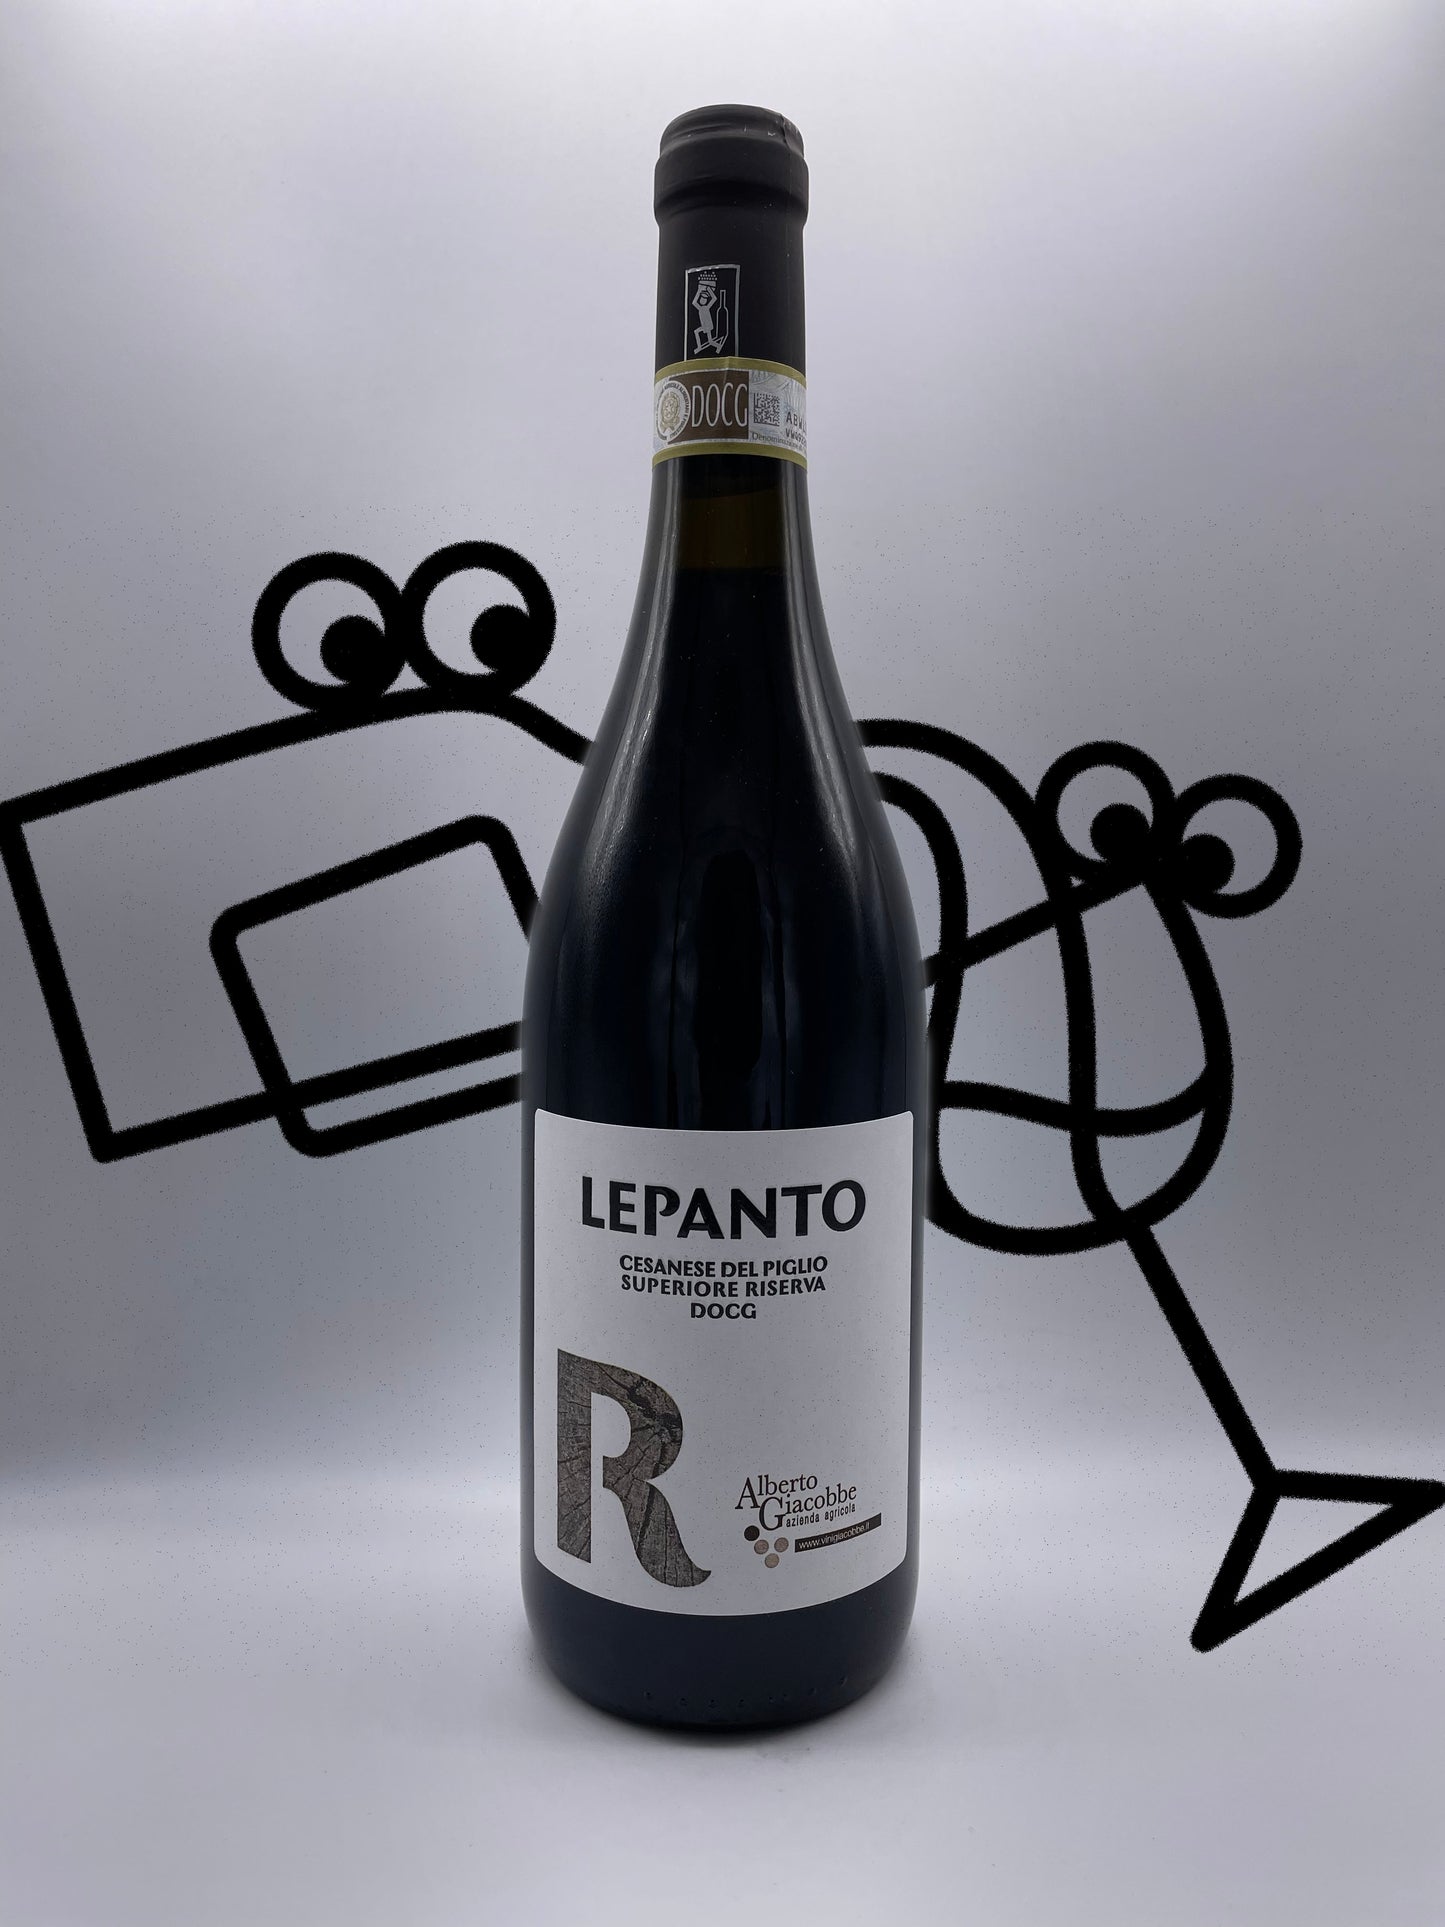 Alberto Giacobbe 'Lepanto' 2018 Cesanese del Piglio Superoire Reserva Williston Park Wines